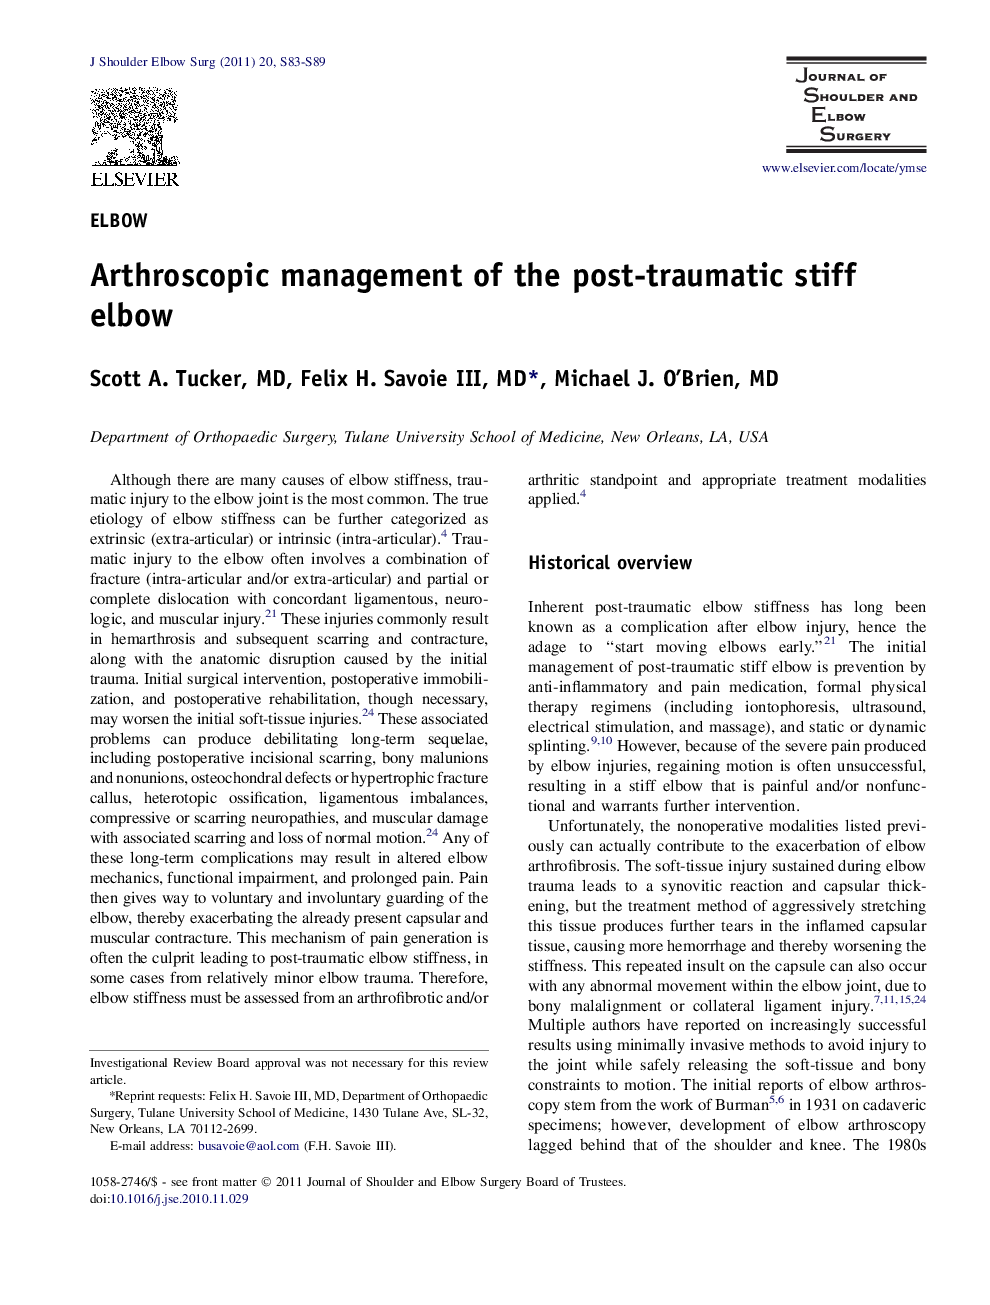 Arthroscopic management of the post-traumatic stiff elbow